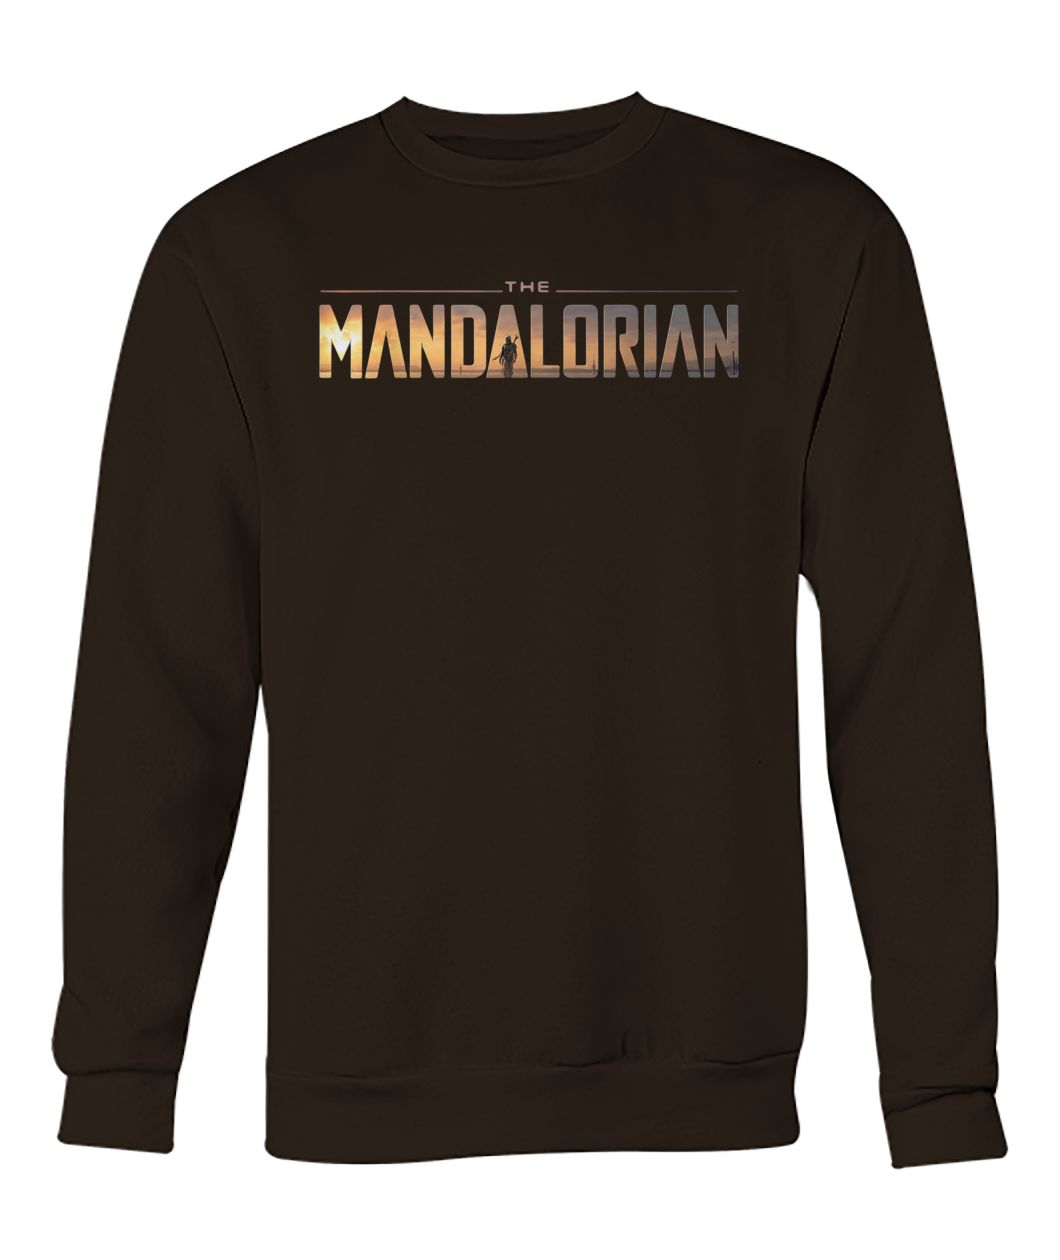 Star wars the mandalorian series logo crew neck sweatshirt